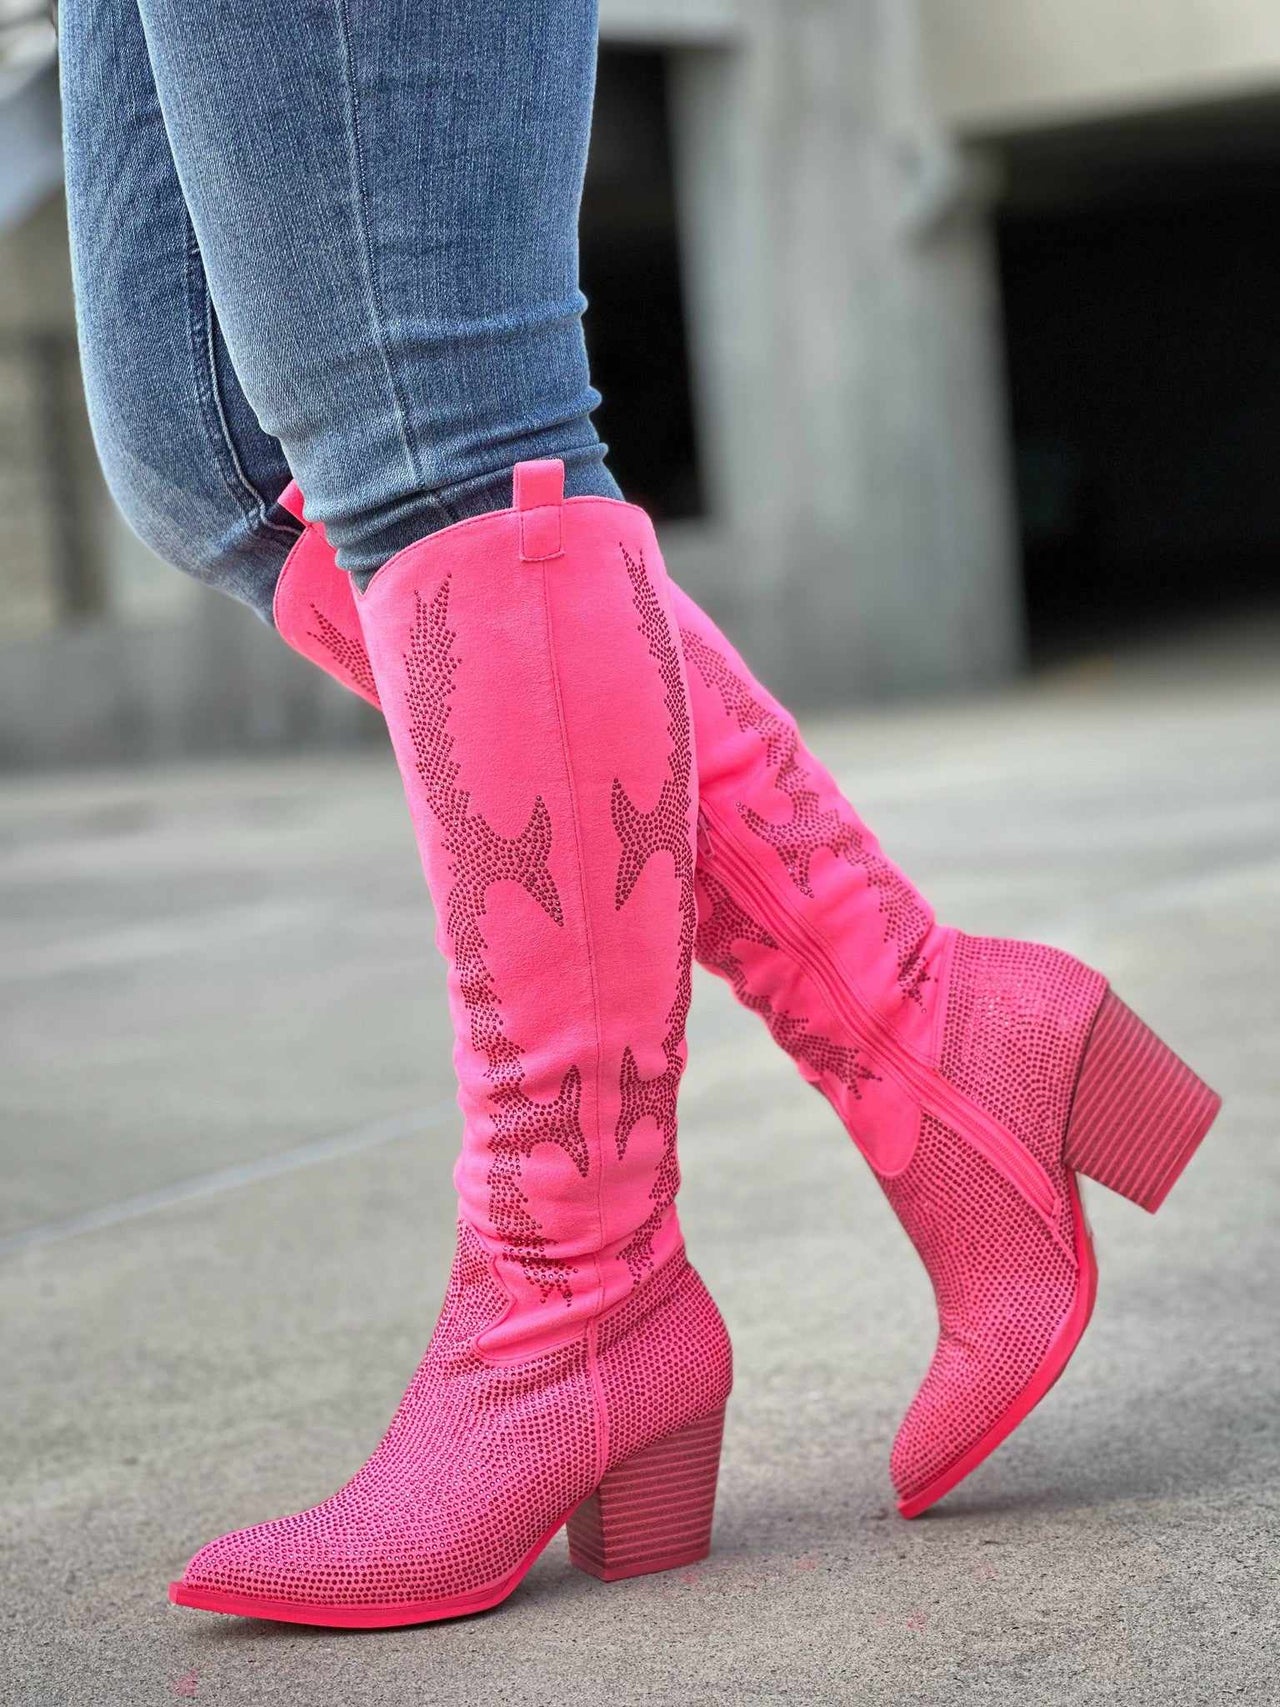 Hot pink rhinestone western boots.